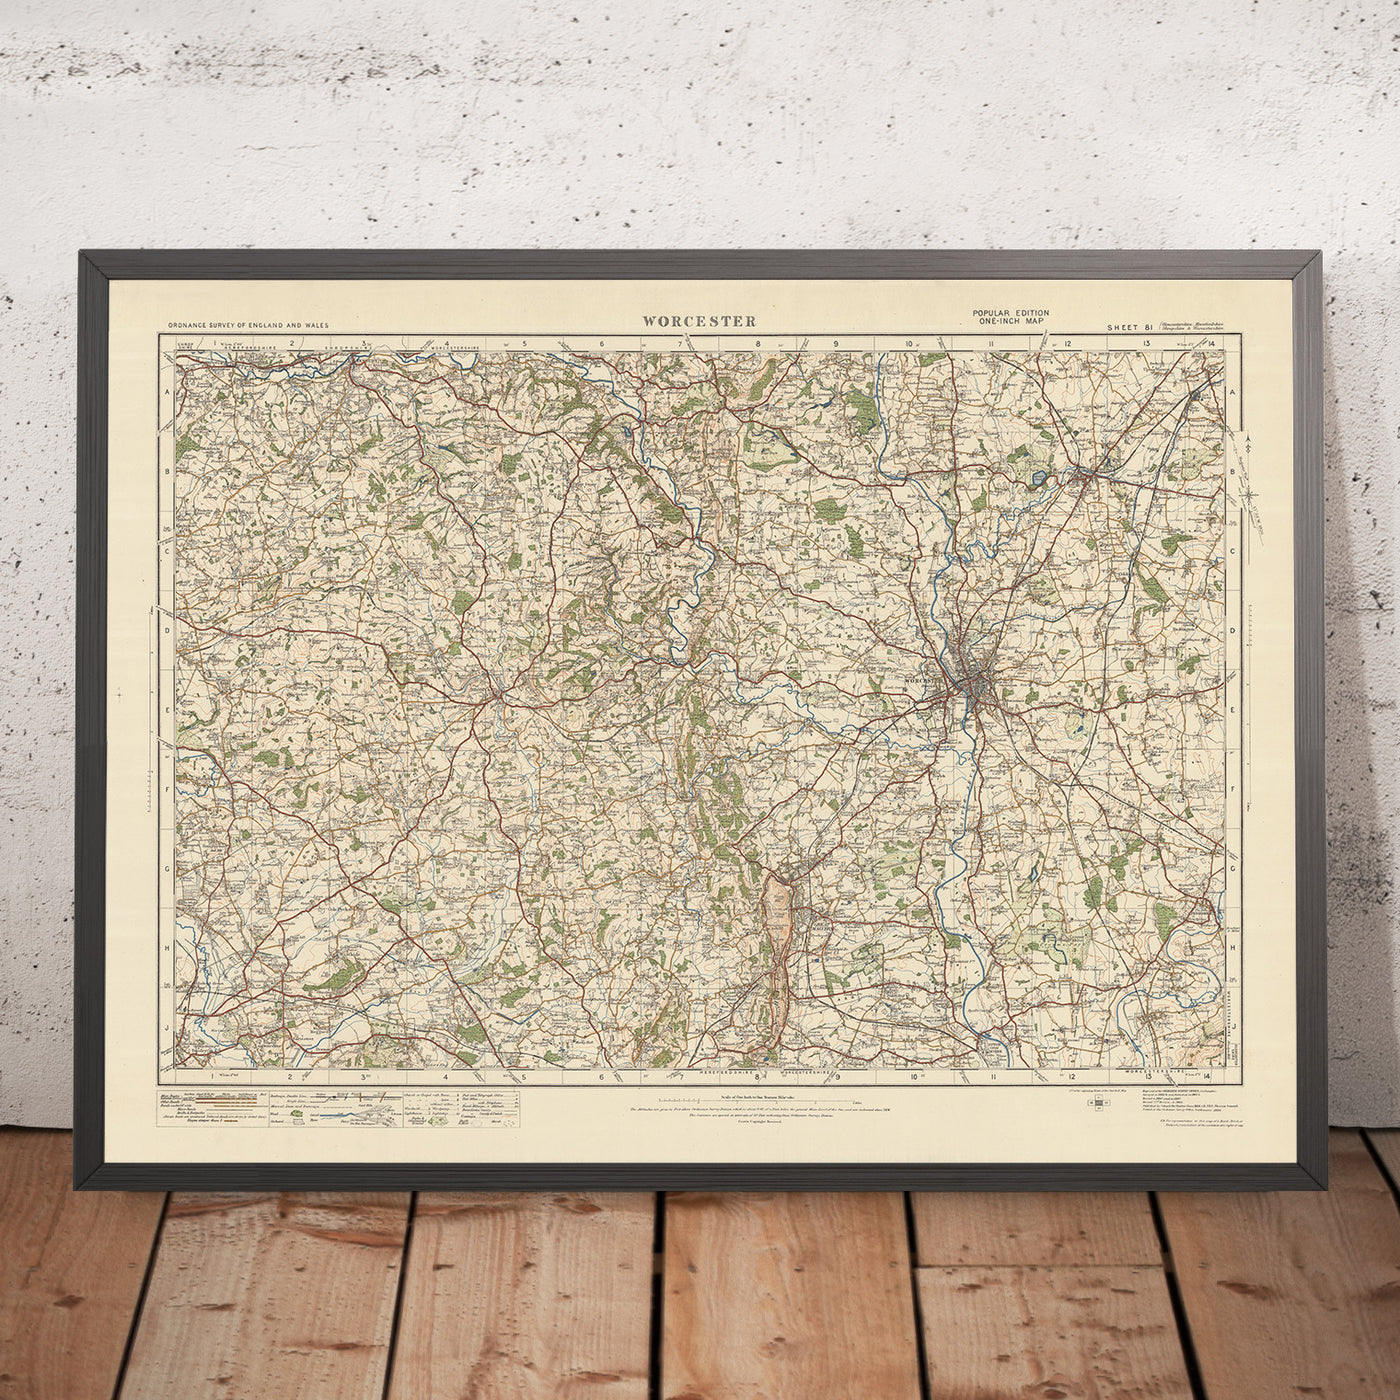 Old Ordnance Survey Map, Sheet 81 - Worcester, 1925: Droitwich Spa, Bromyard, Tenbury Wells, Pershore, Malvern Hills AONB